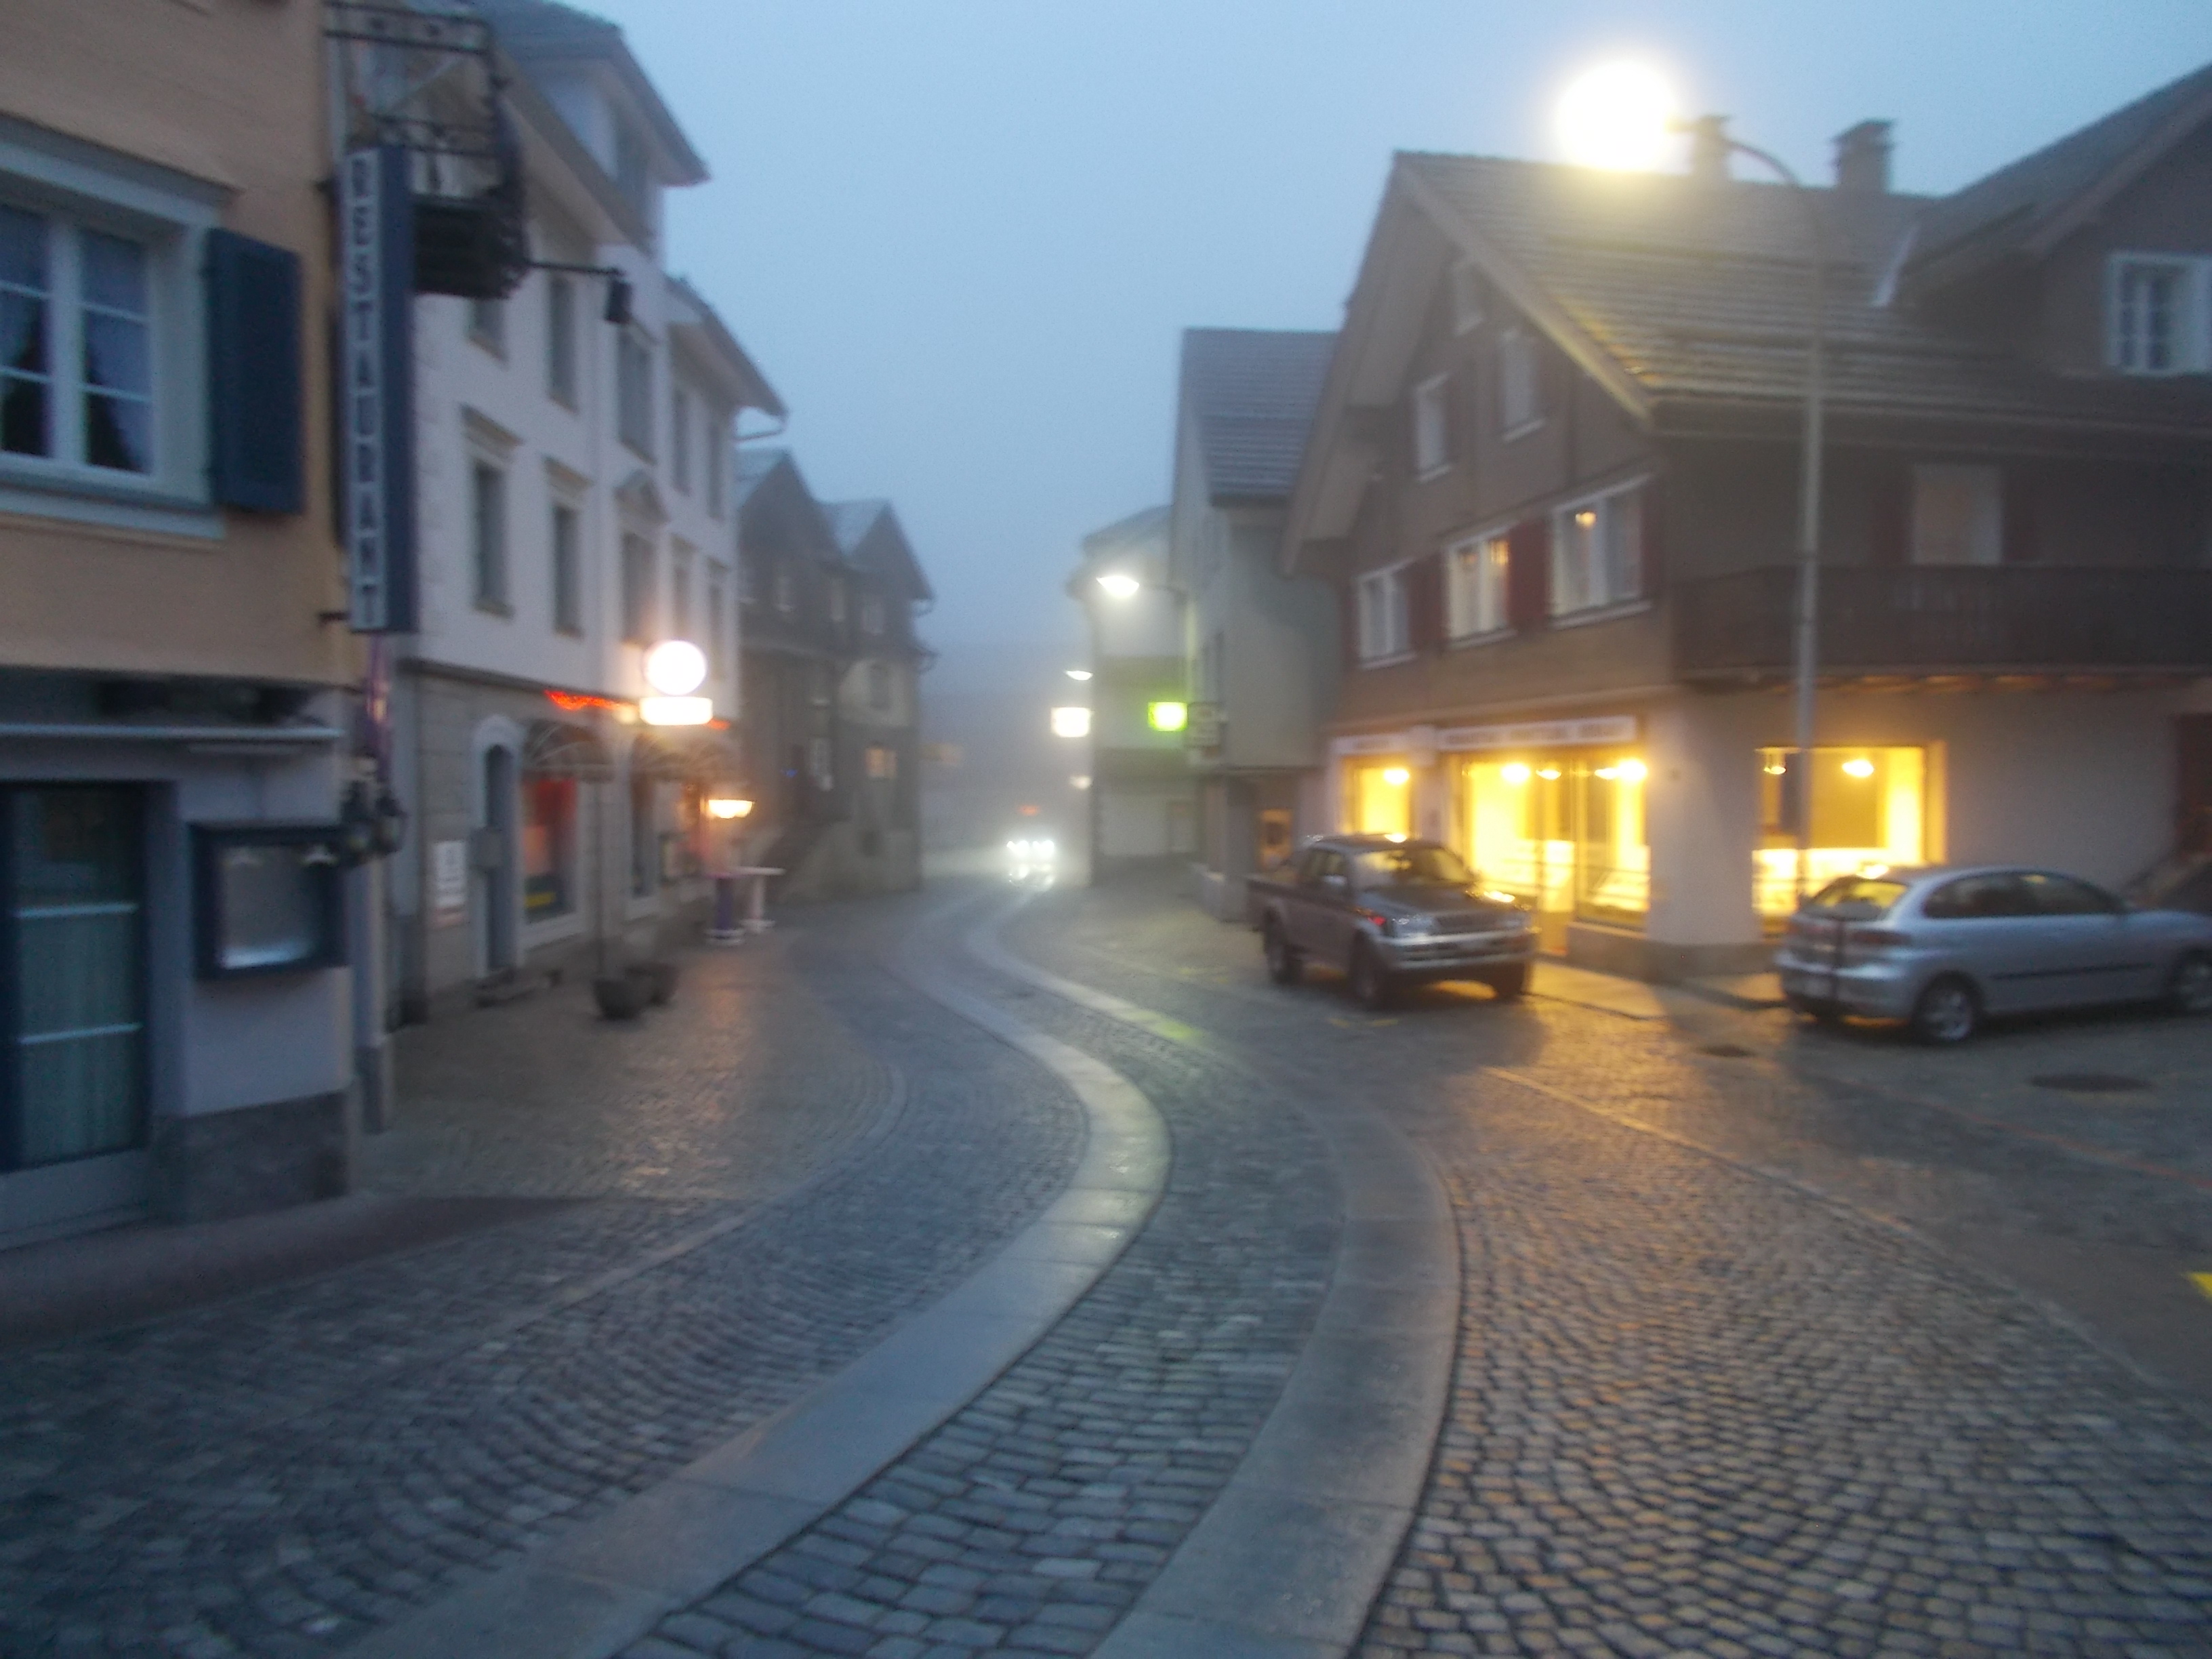 A misty evening in Andermatt, Switzerland on May 3, 2014